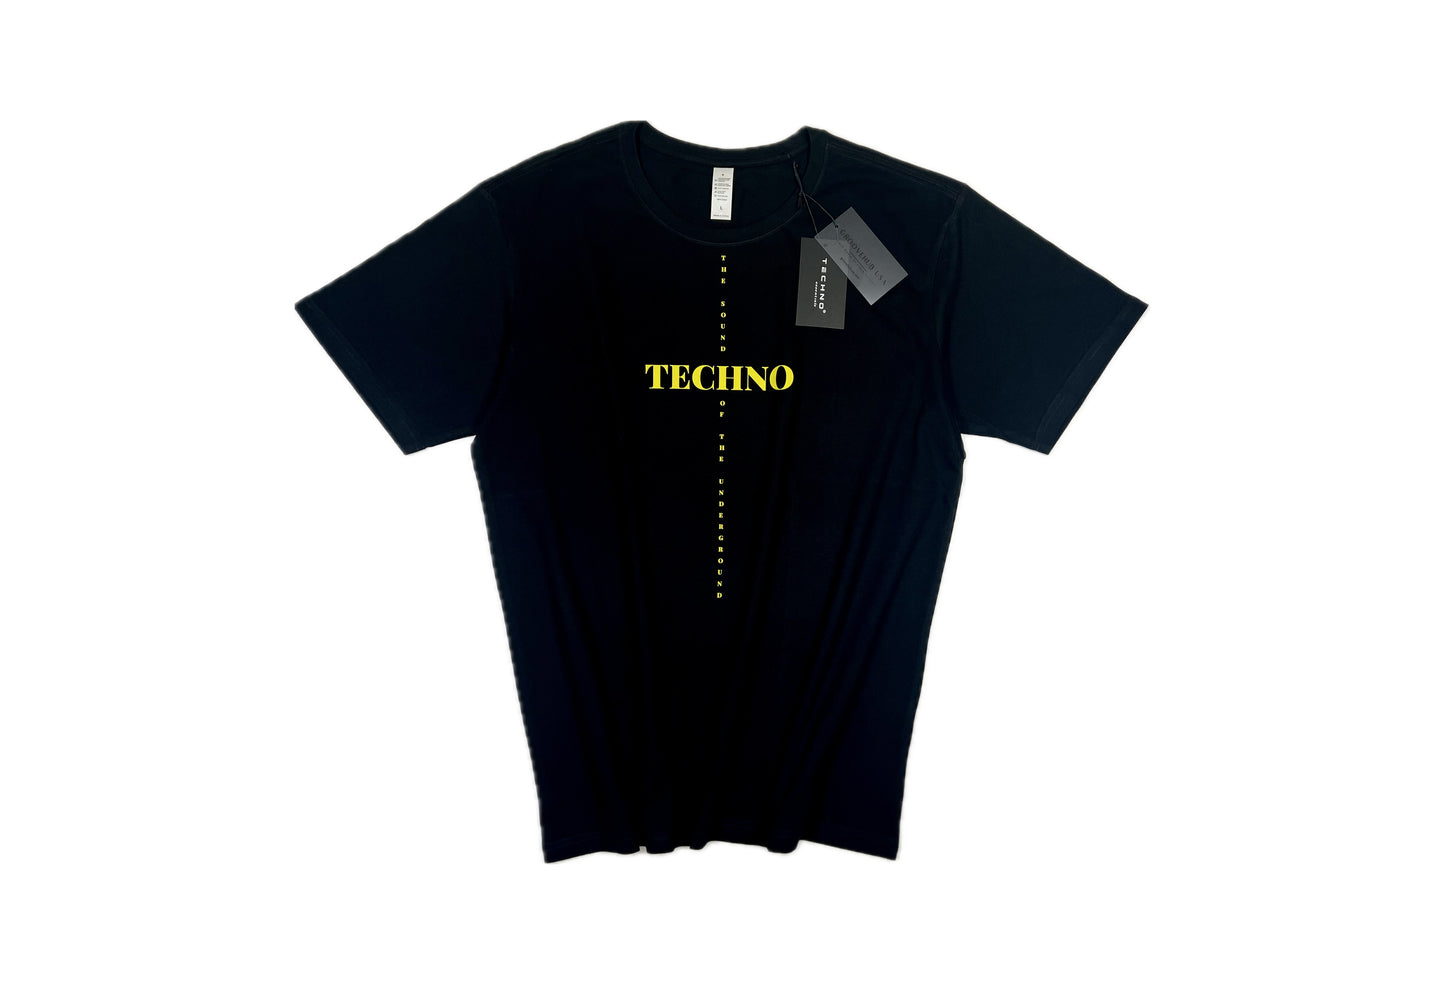 TECHNO essentials Mens Premium Quality 100% Cotton T-Shirt Slim Fit Casual Festival Clubwear - TECHNO essentials